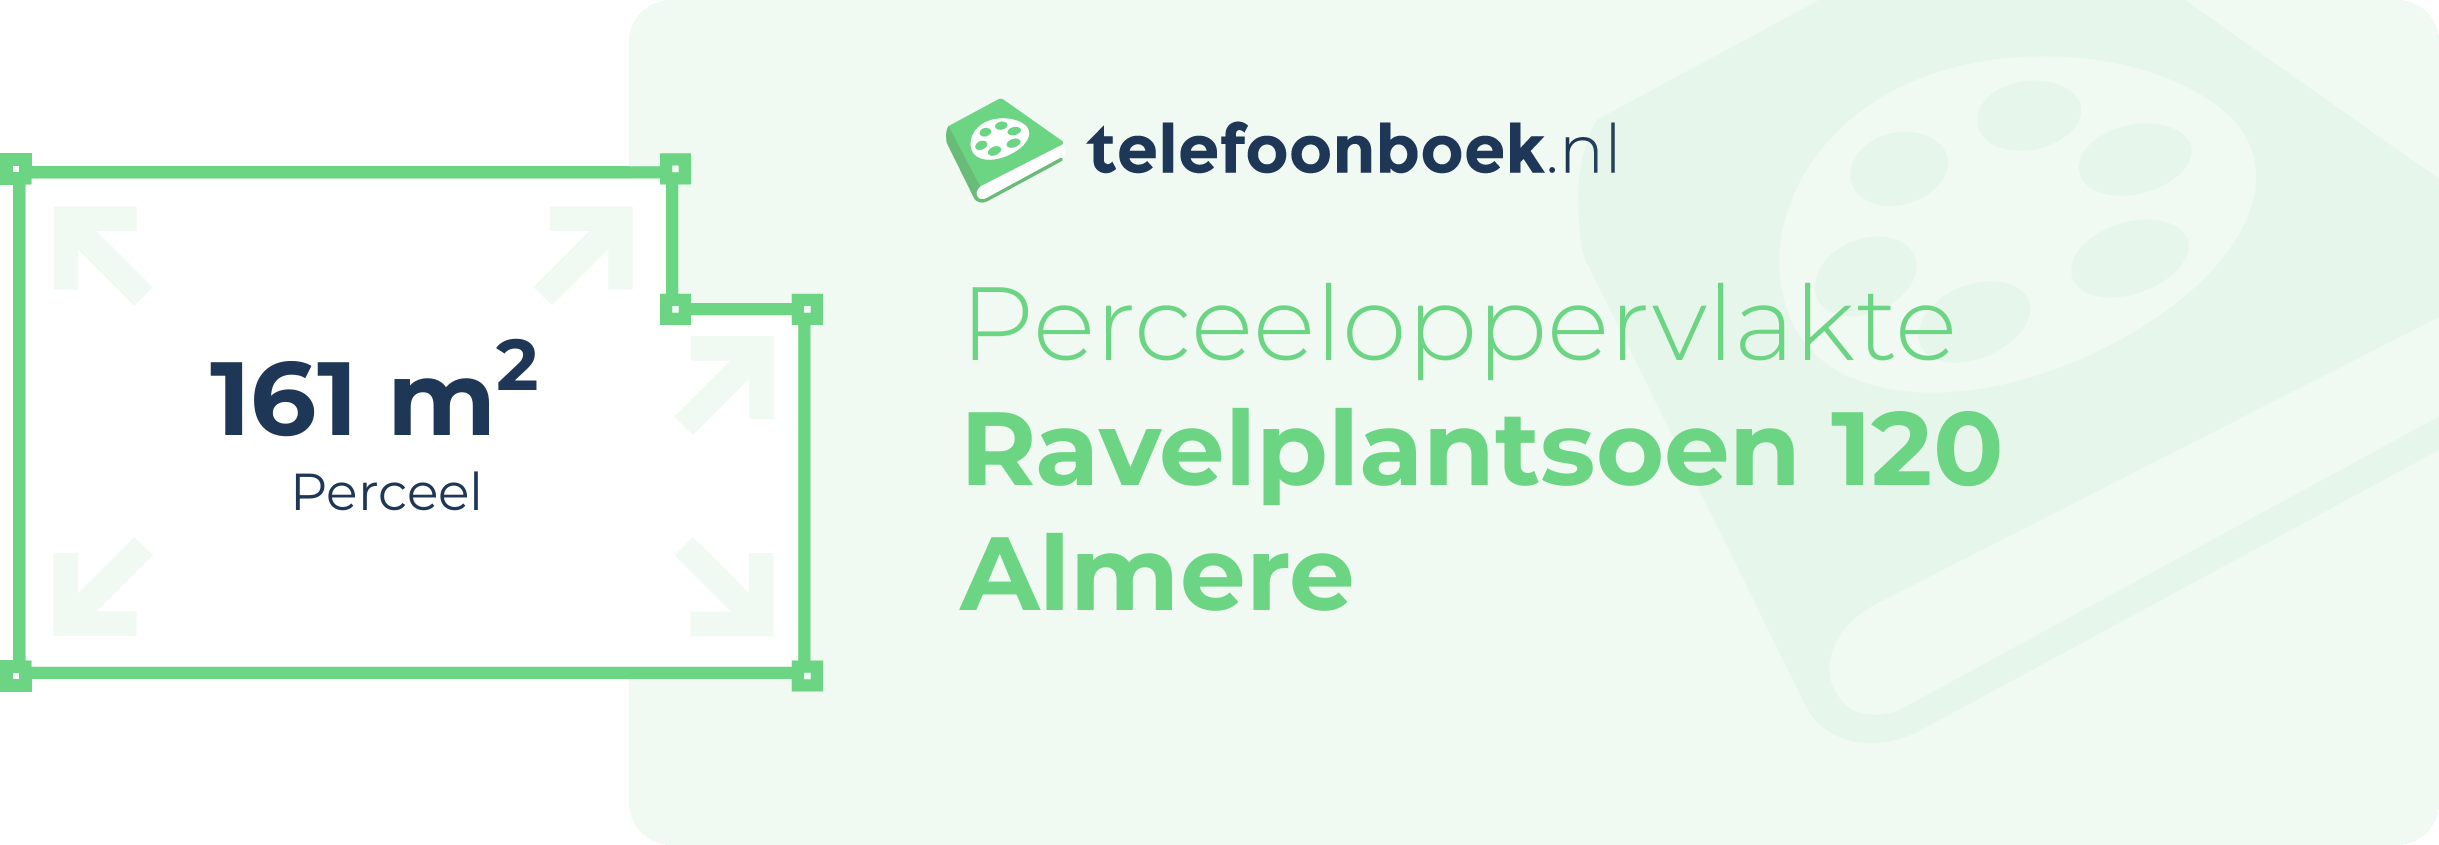 Perceeloppervlakte Ravelplantsoen 120 Almere